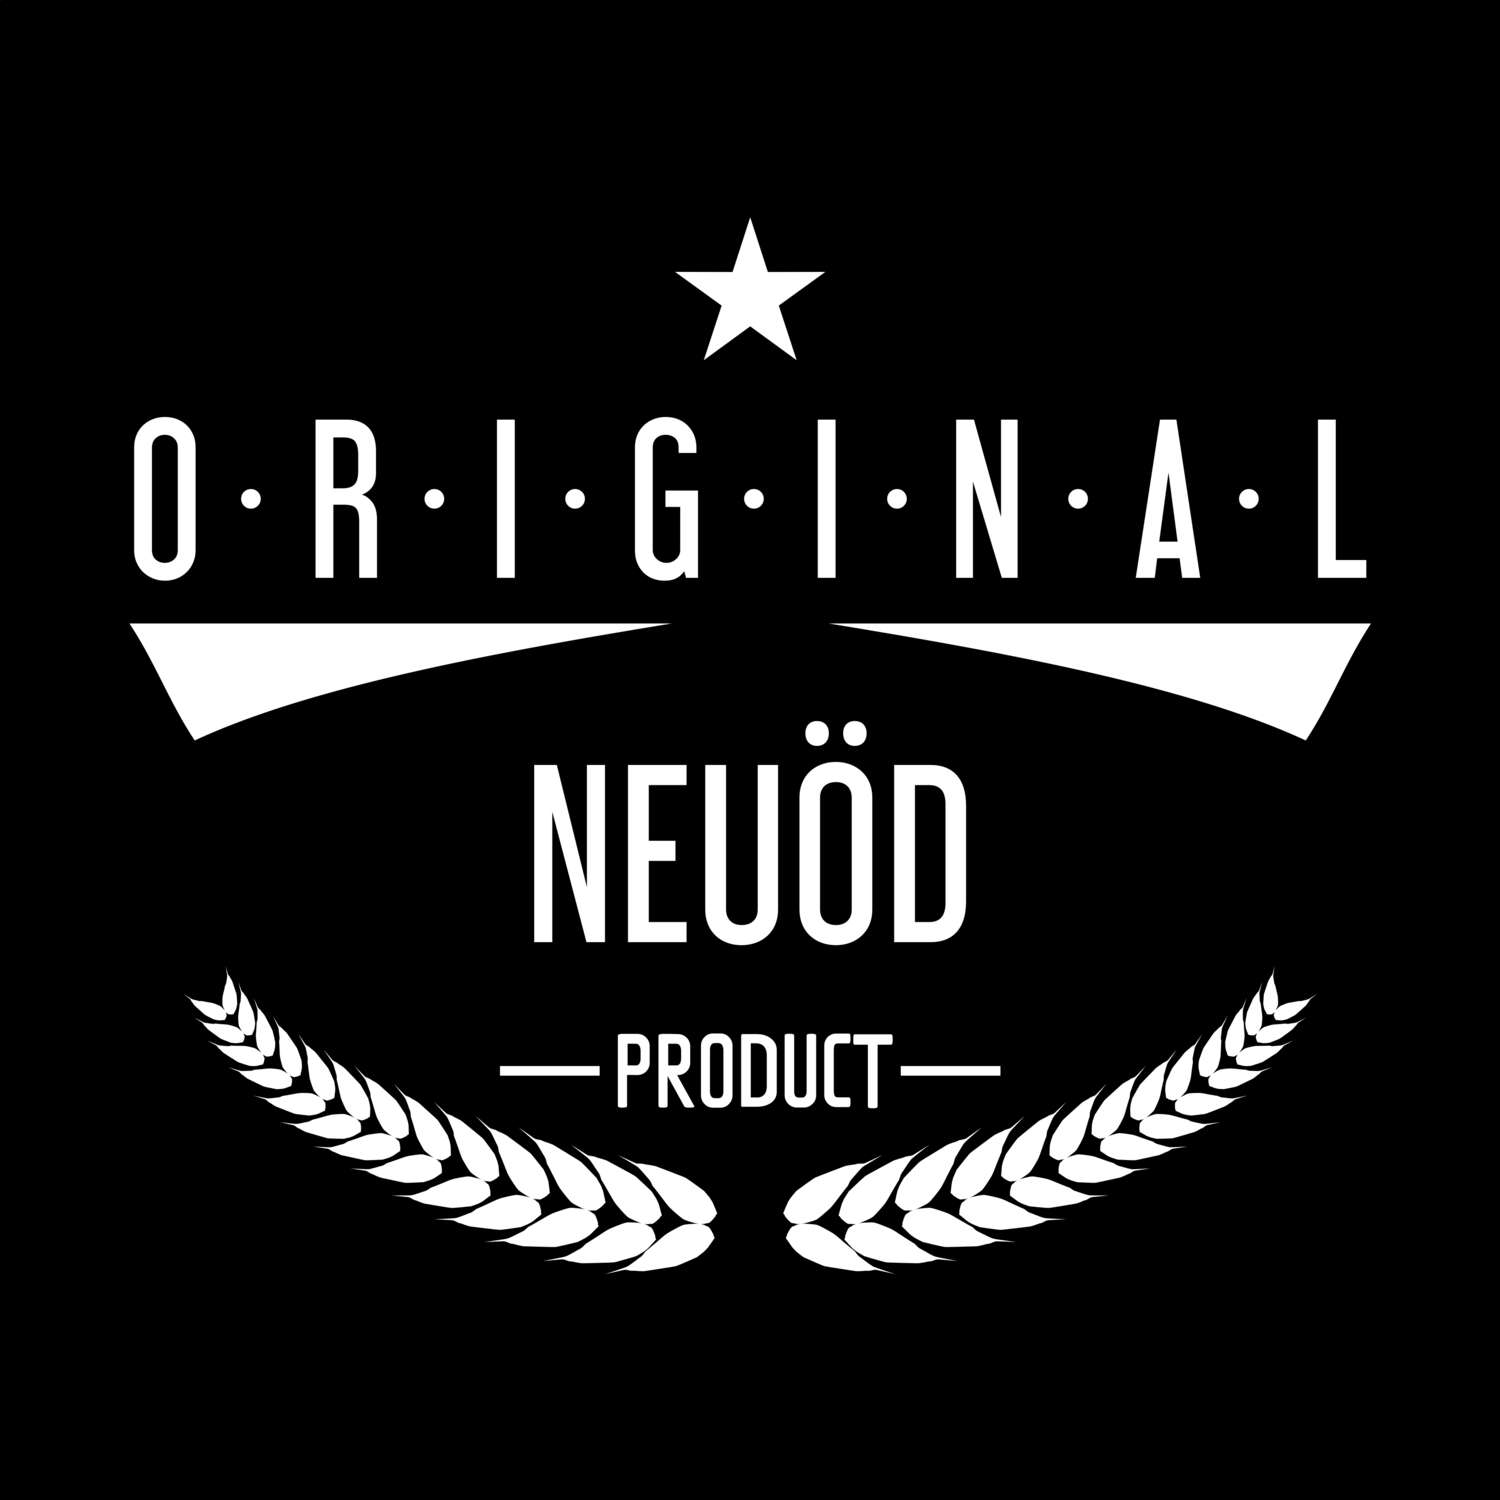 Neuöd T-Shirt »Original Product«